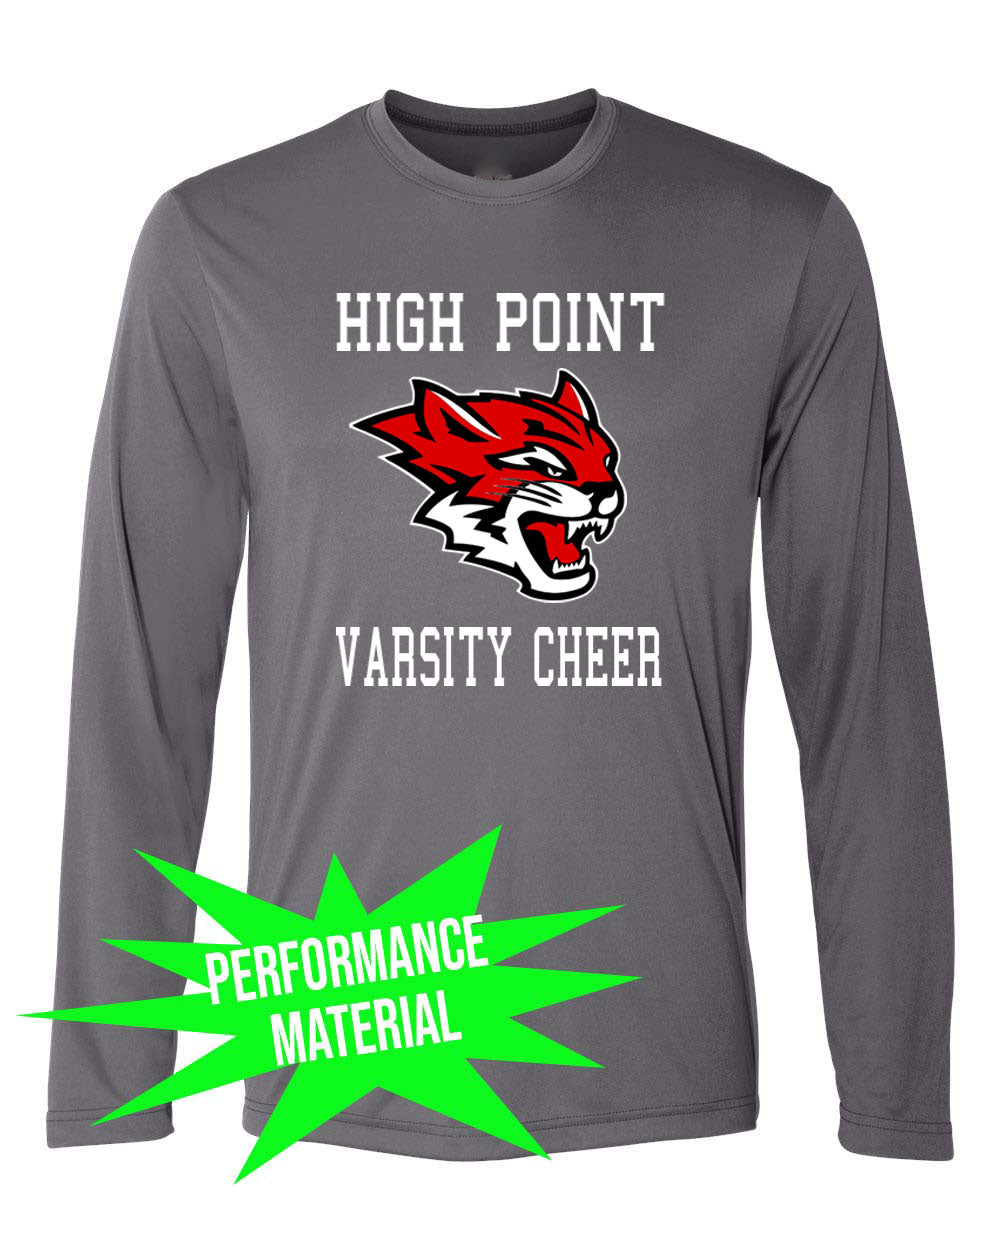 Wildcats cheer Performance Material Design 3 Long Sleeve Shirt